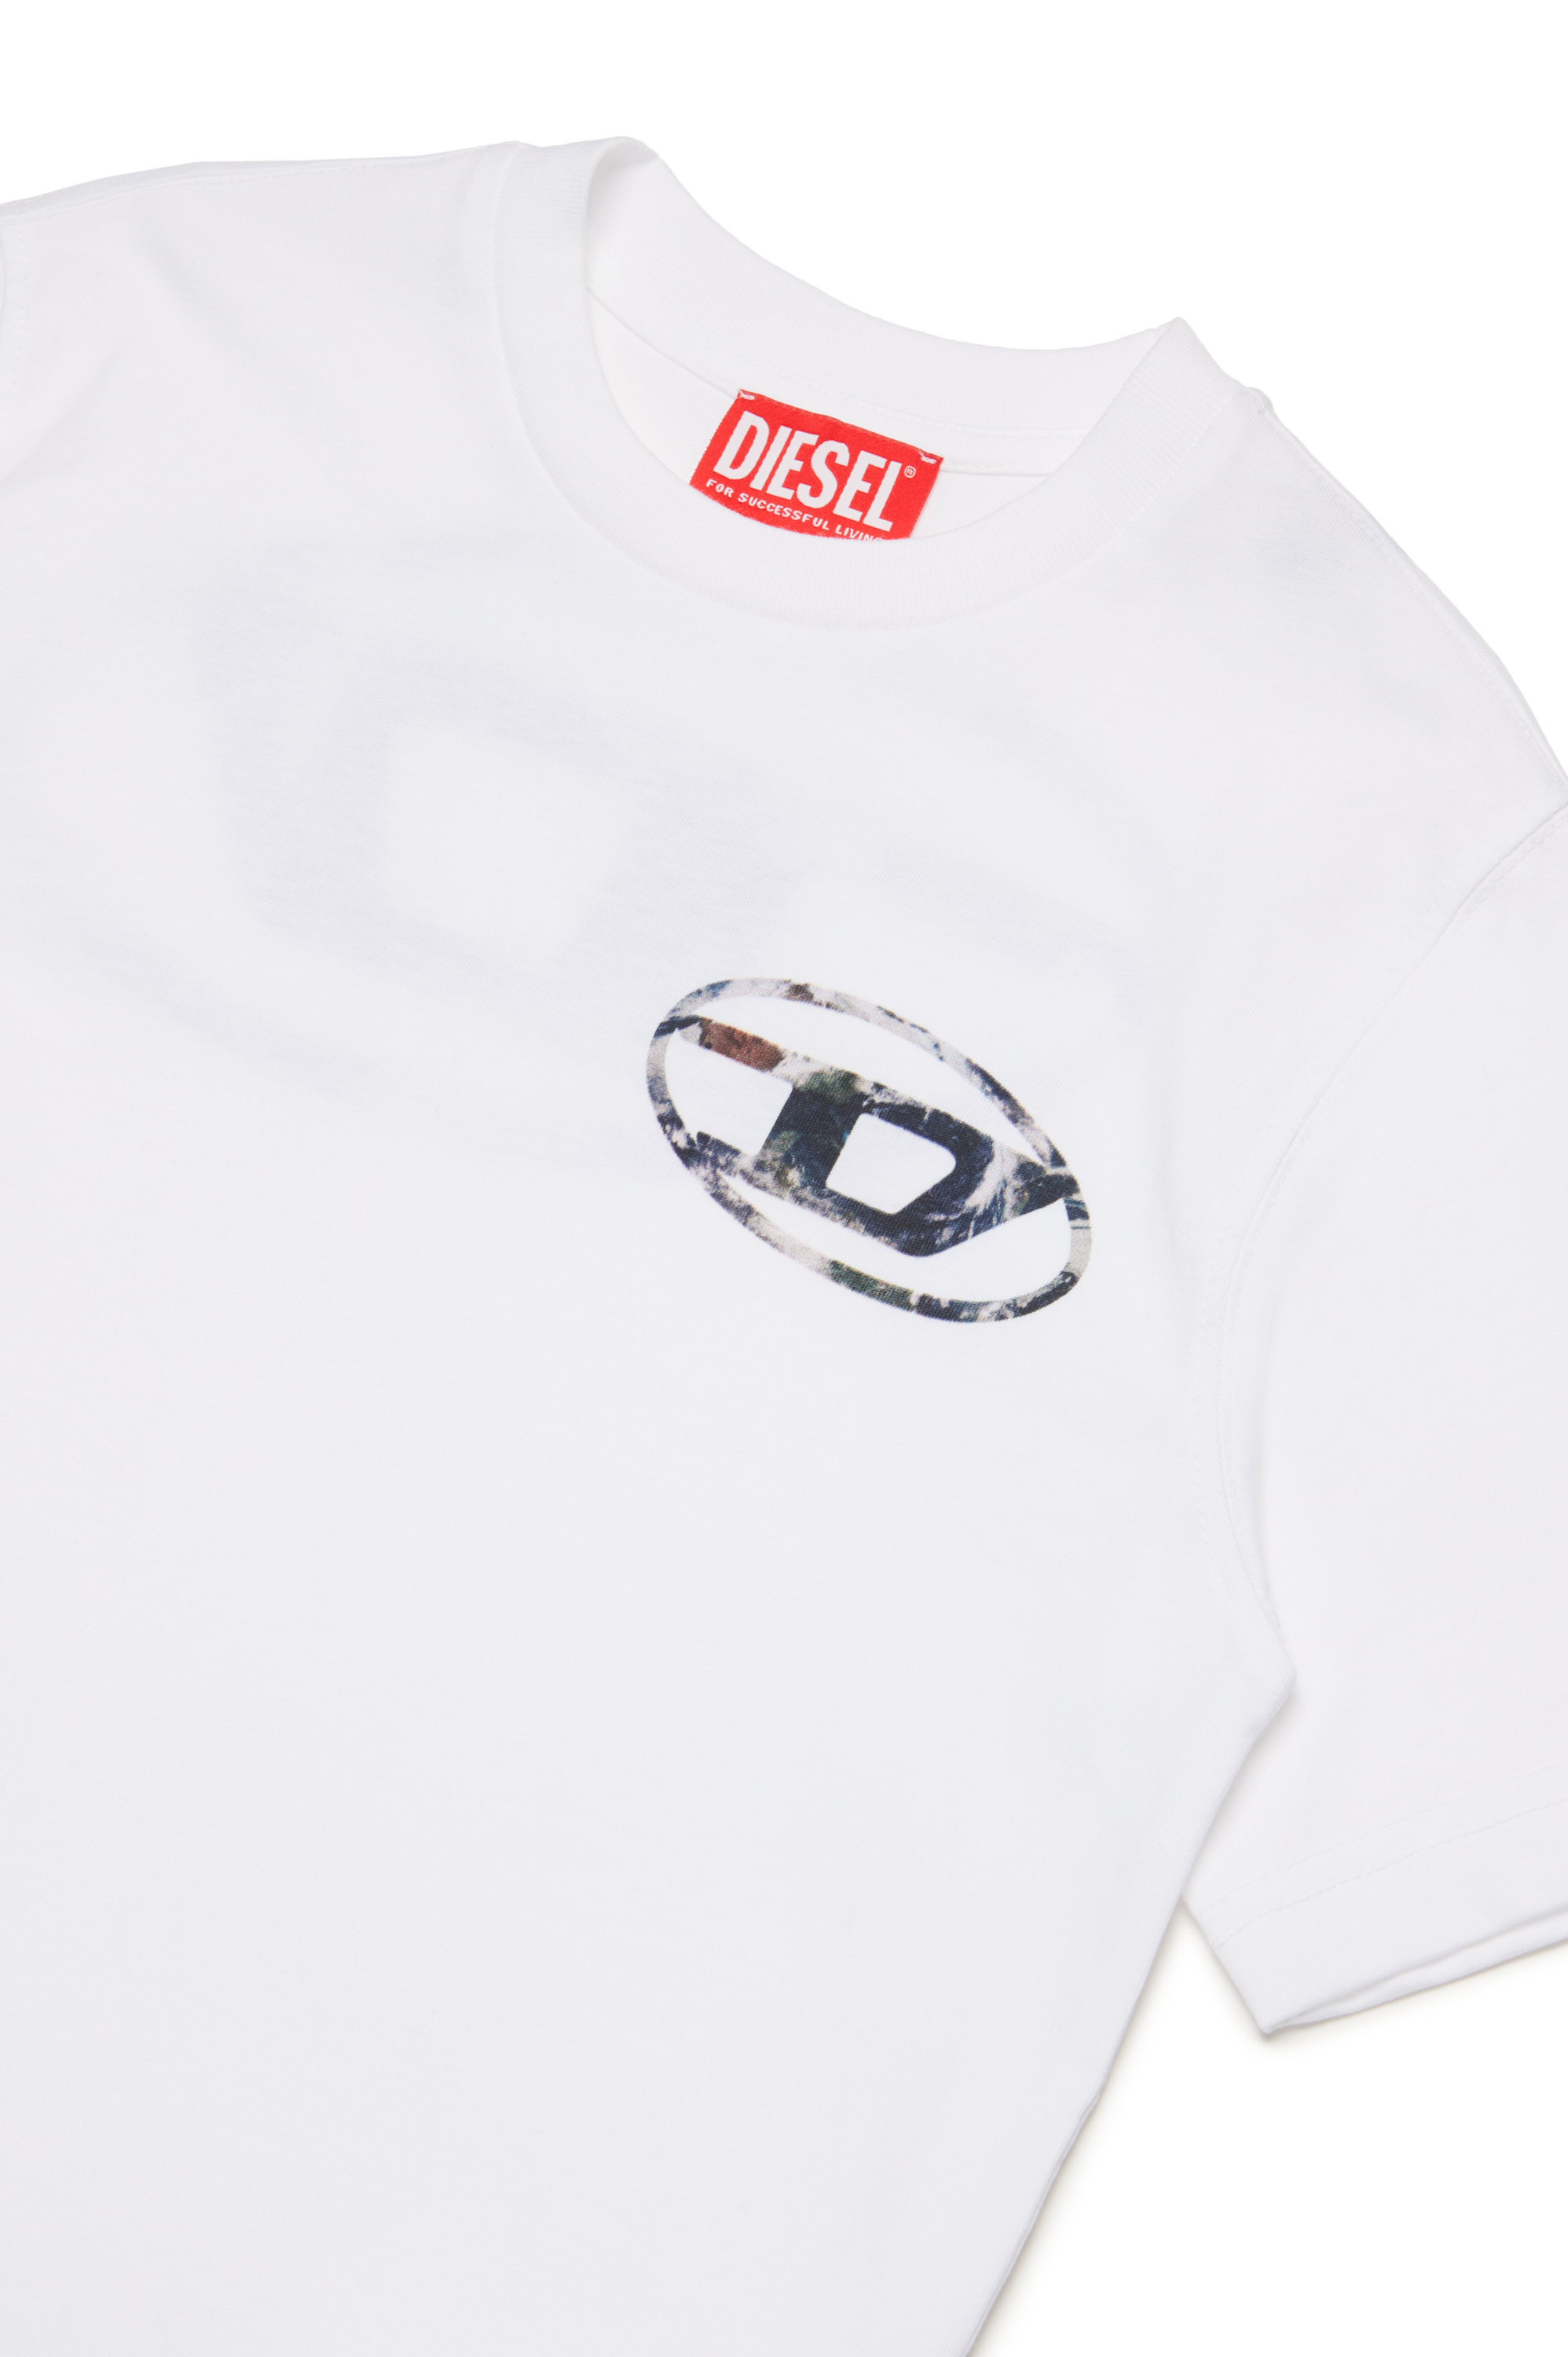 Diesel - TWASHL6 OVER, Homme T-shirt avec logo Oval D effet marbré in Blanc - Image 3